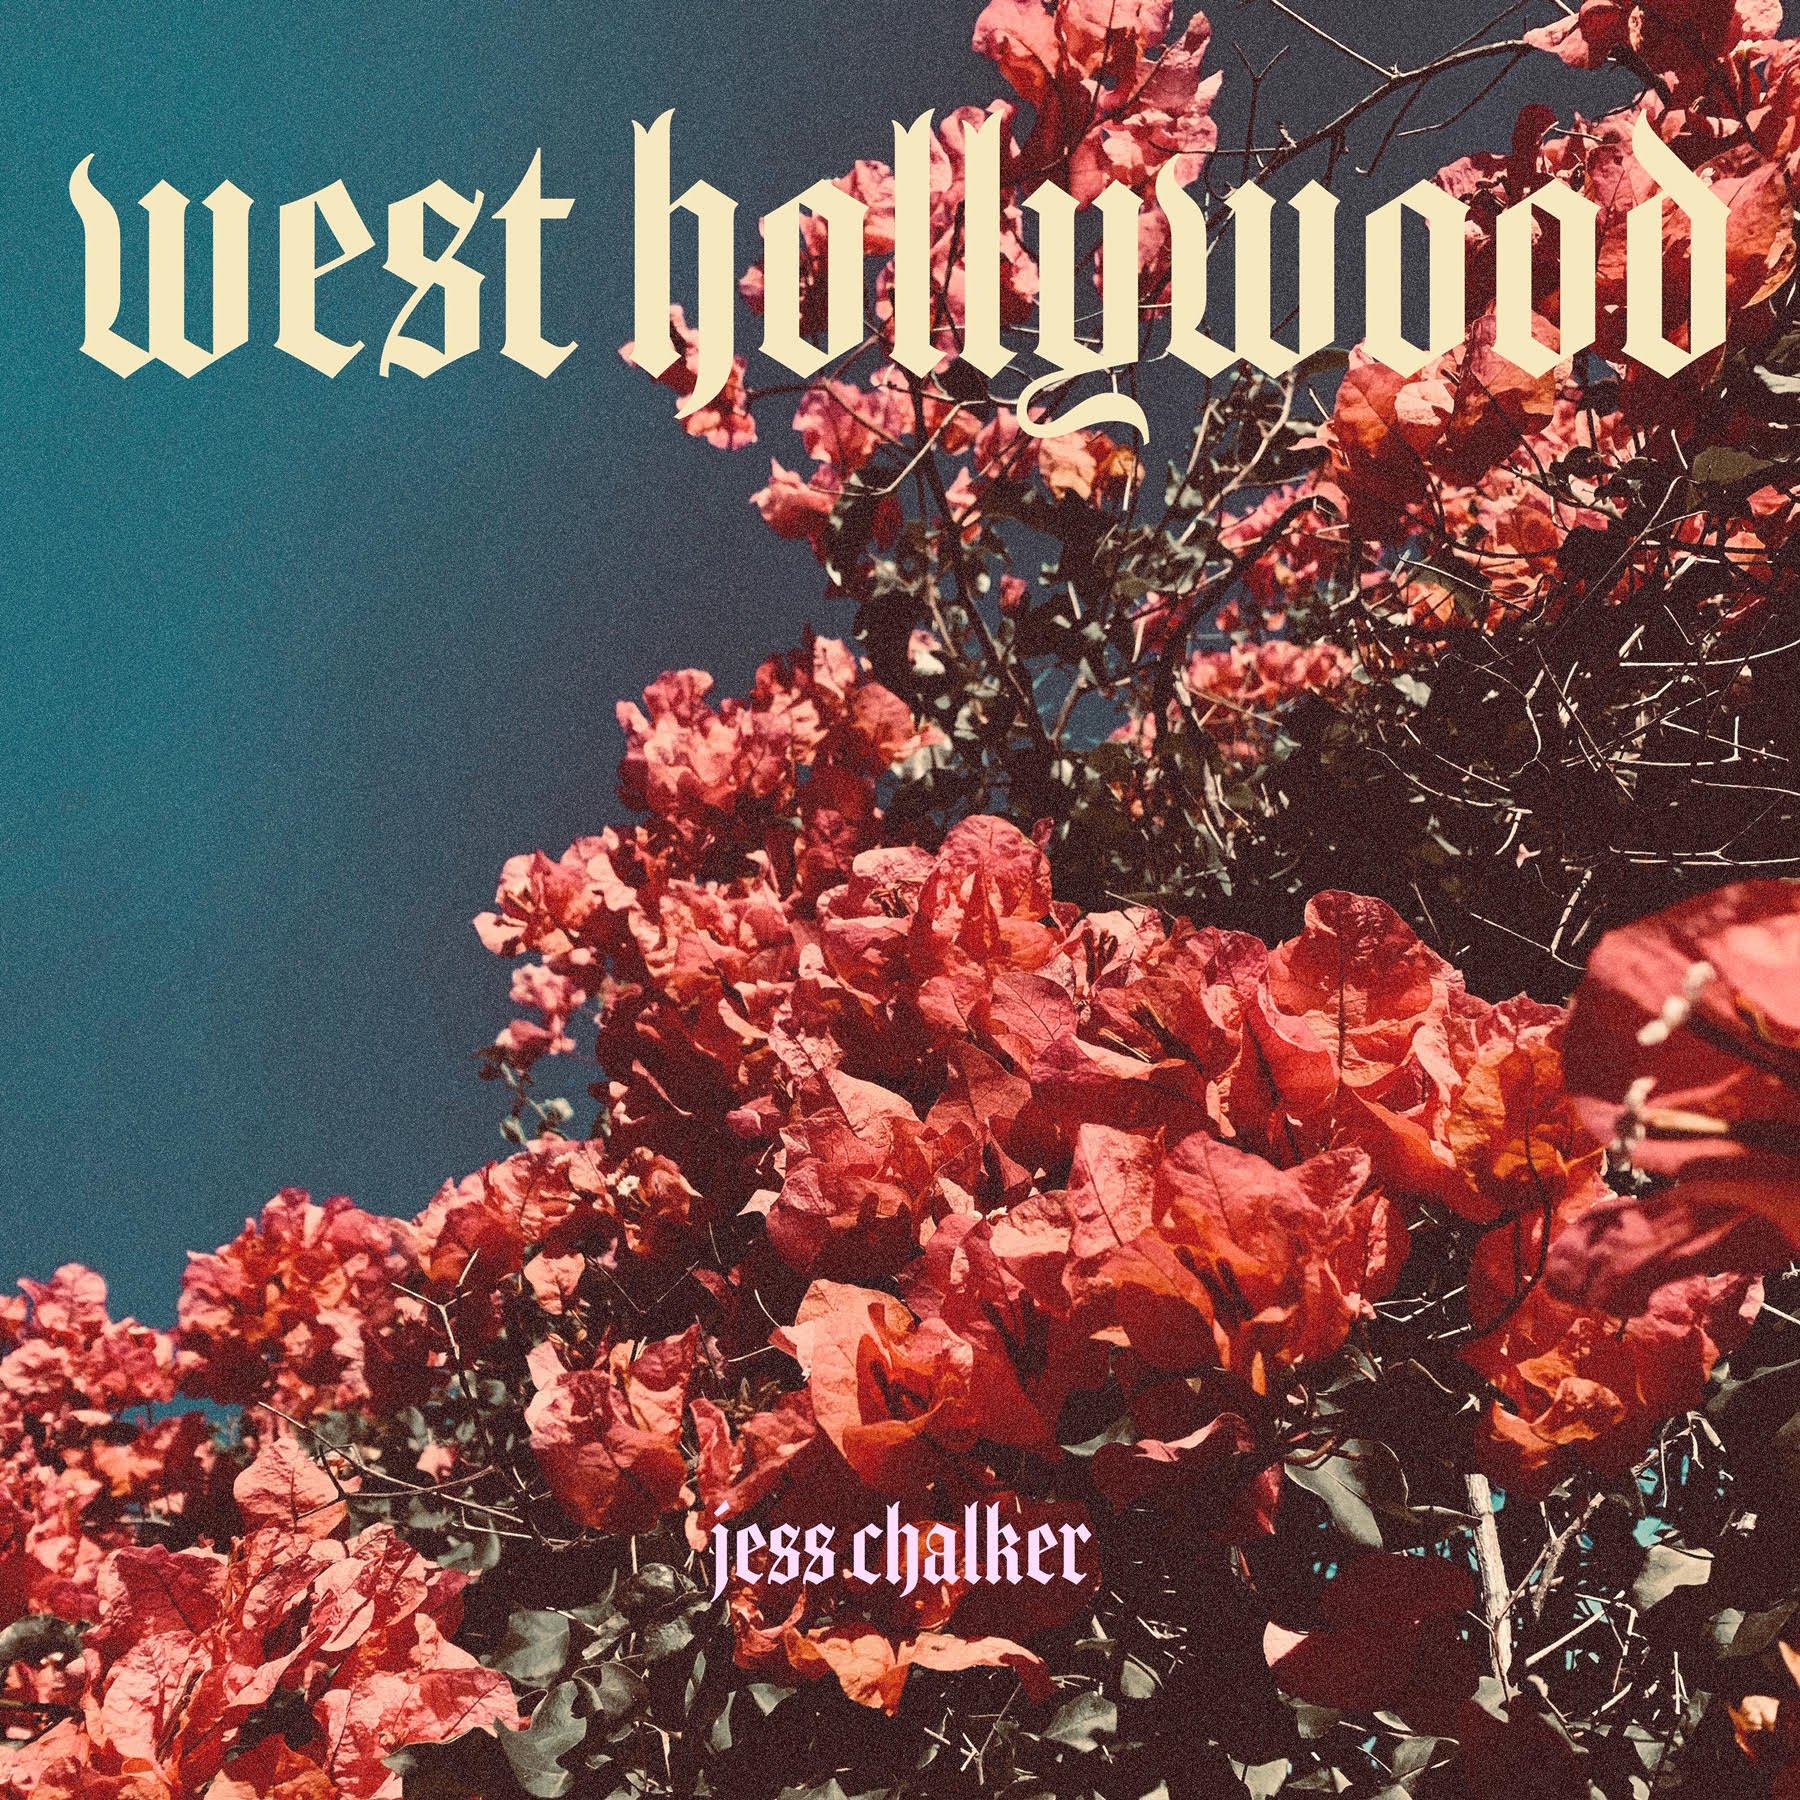 Jess Chalker – “West Hollywood”